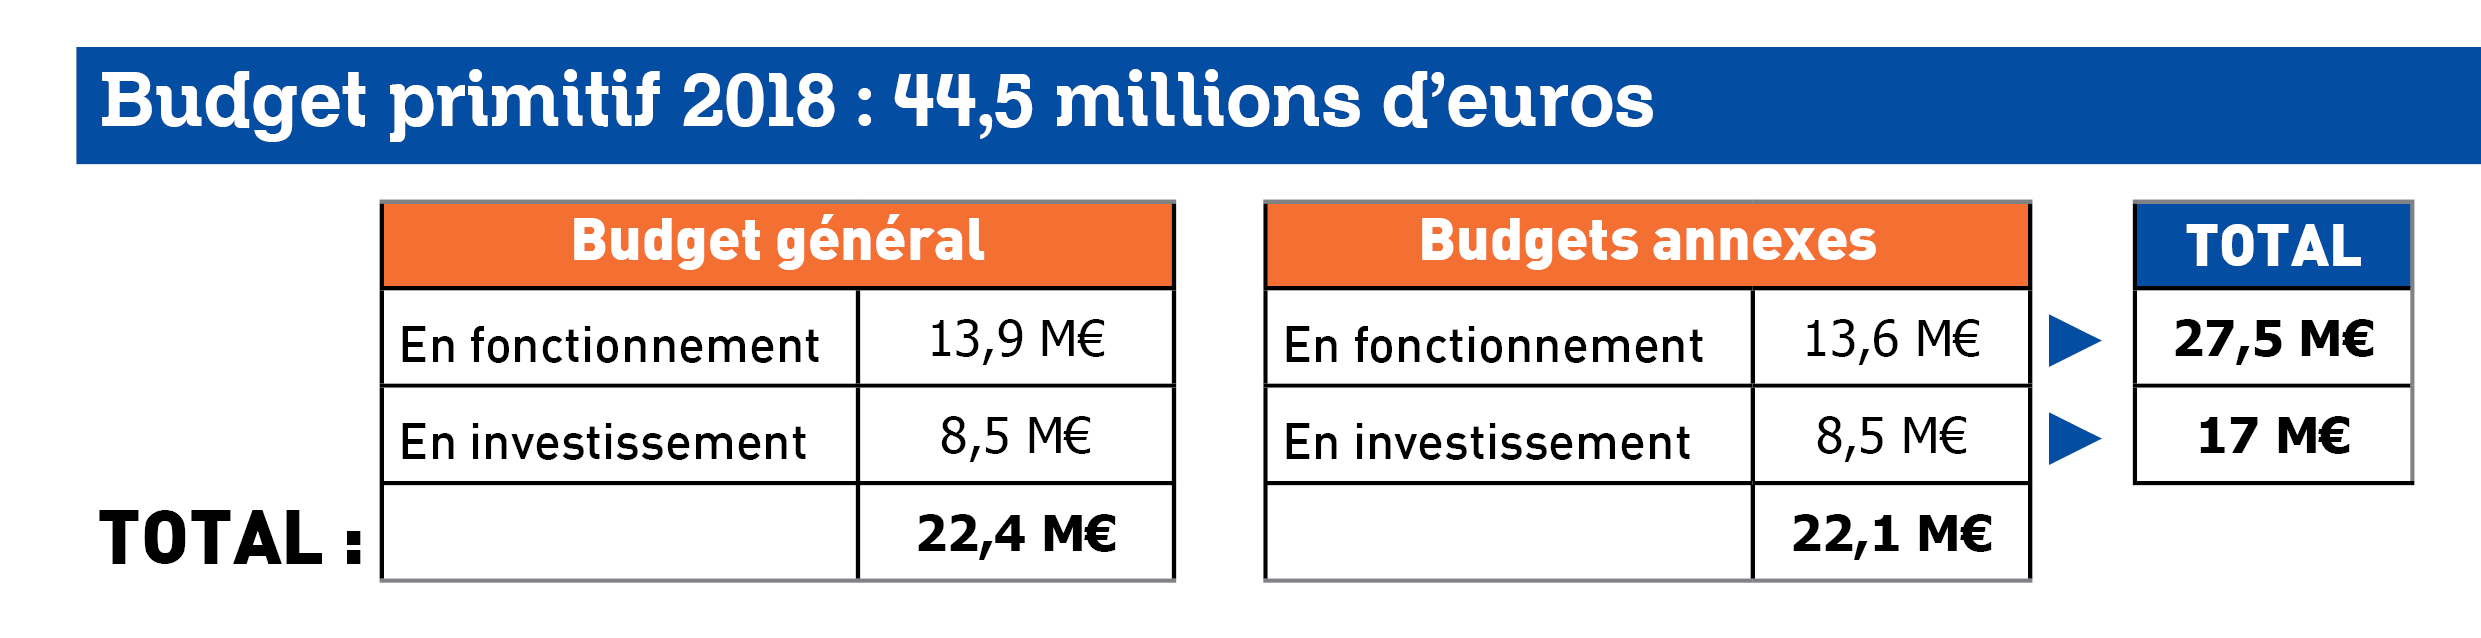 Budget-Primitif-2018-Tableau